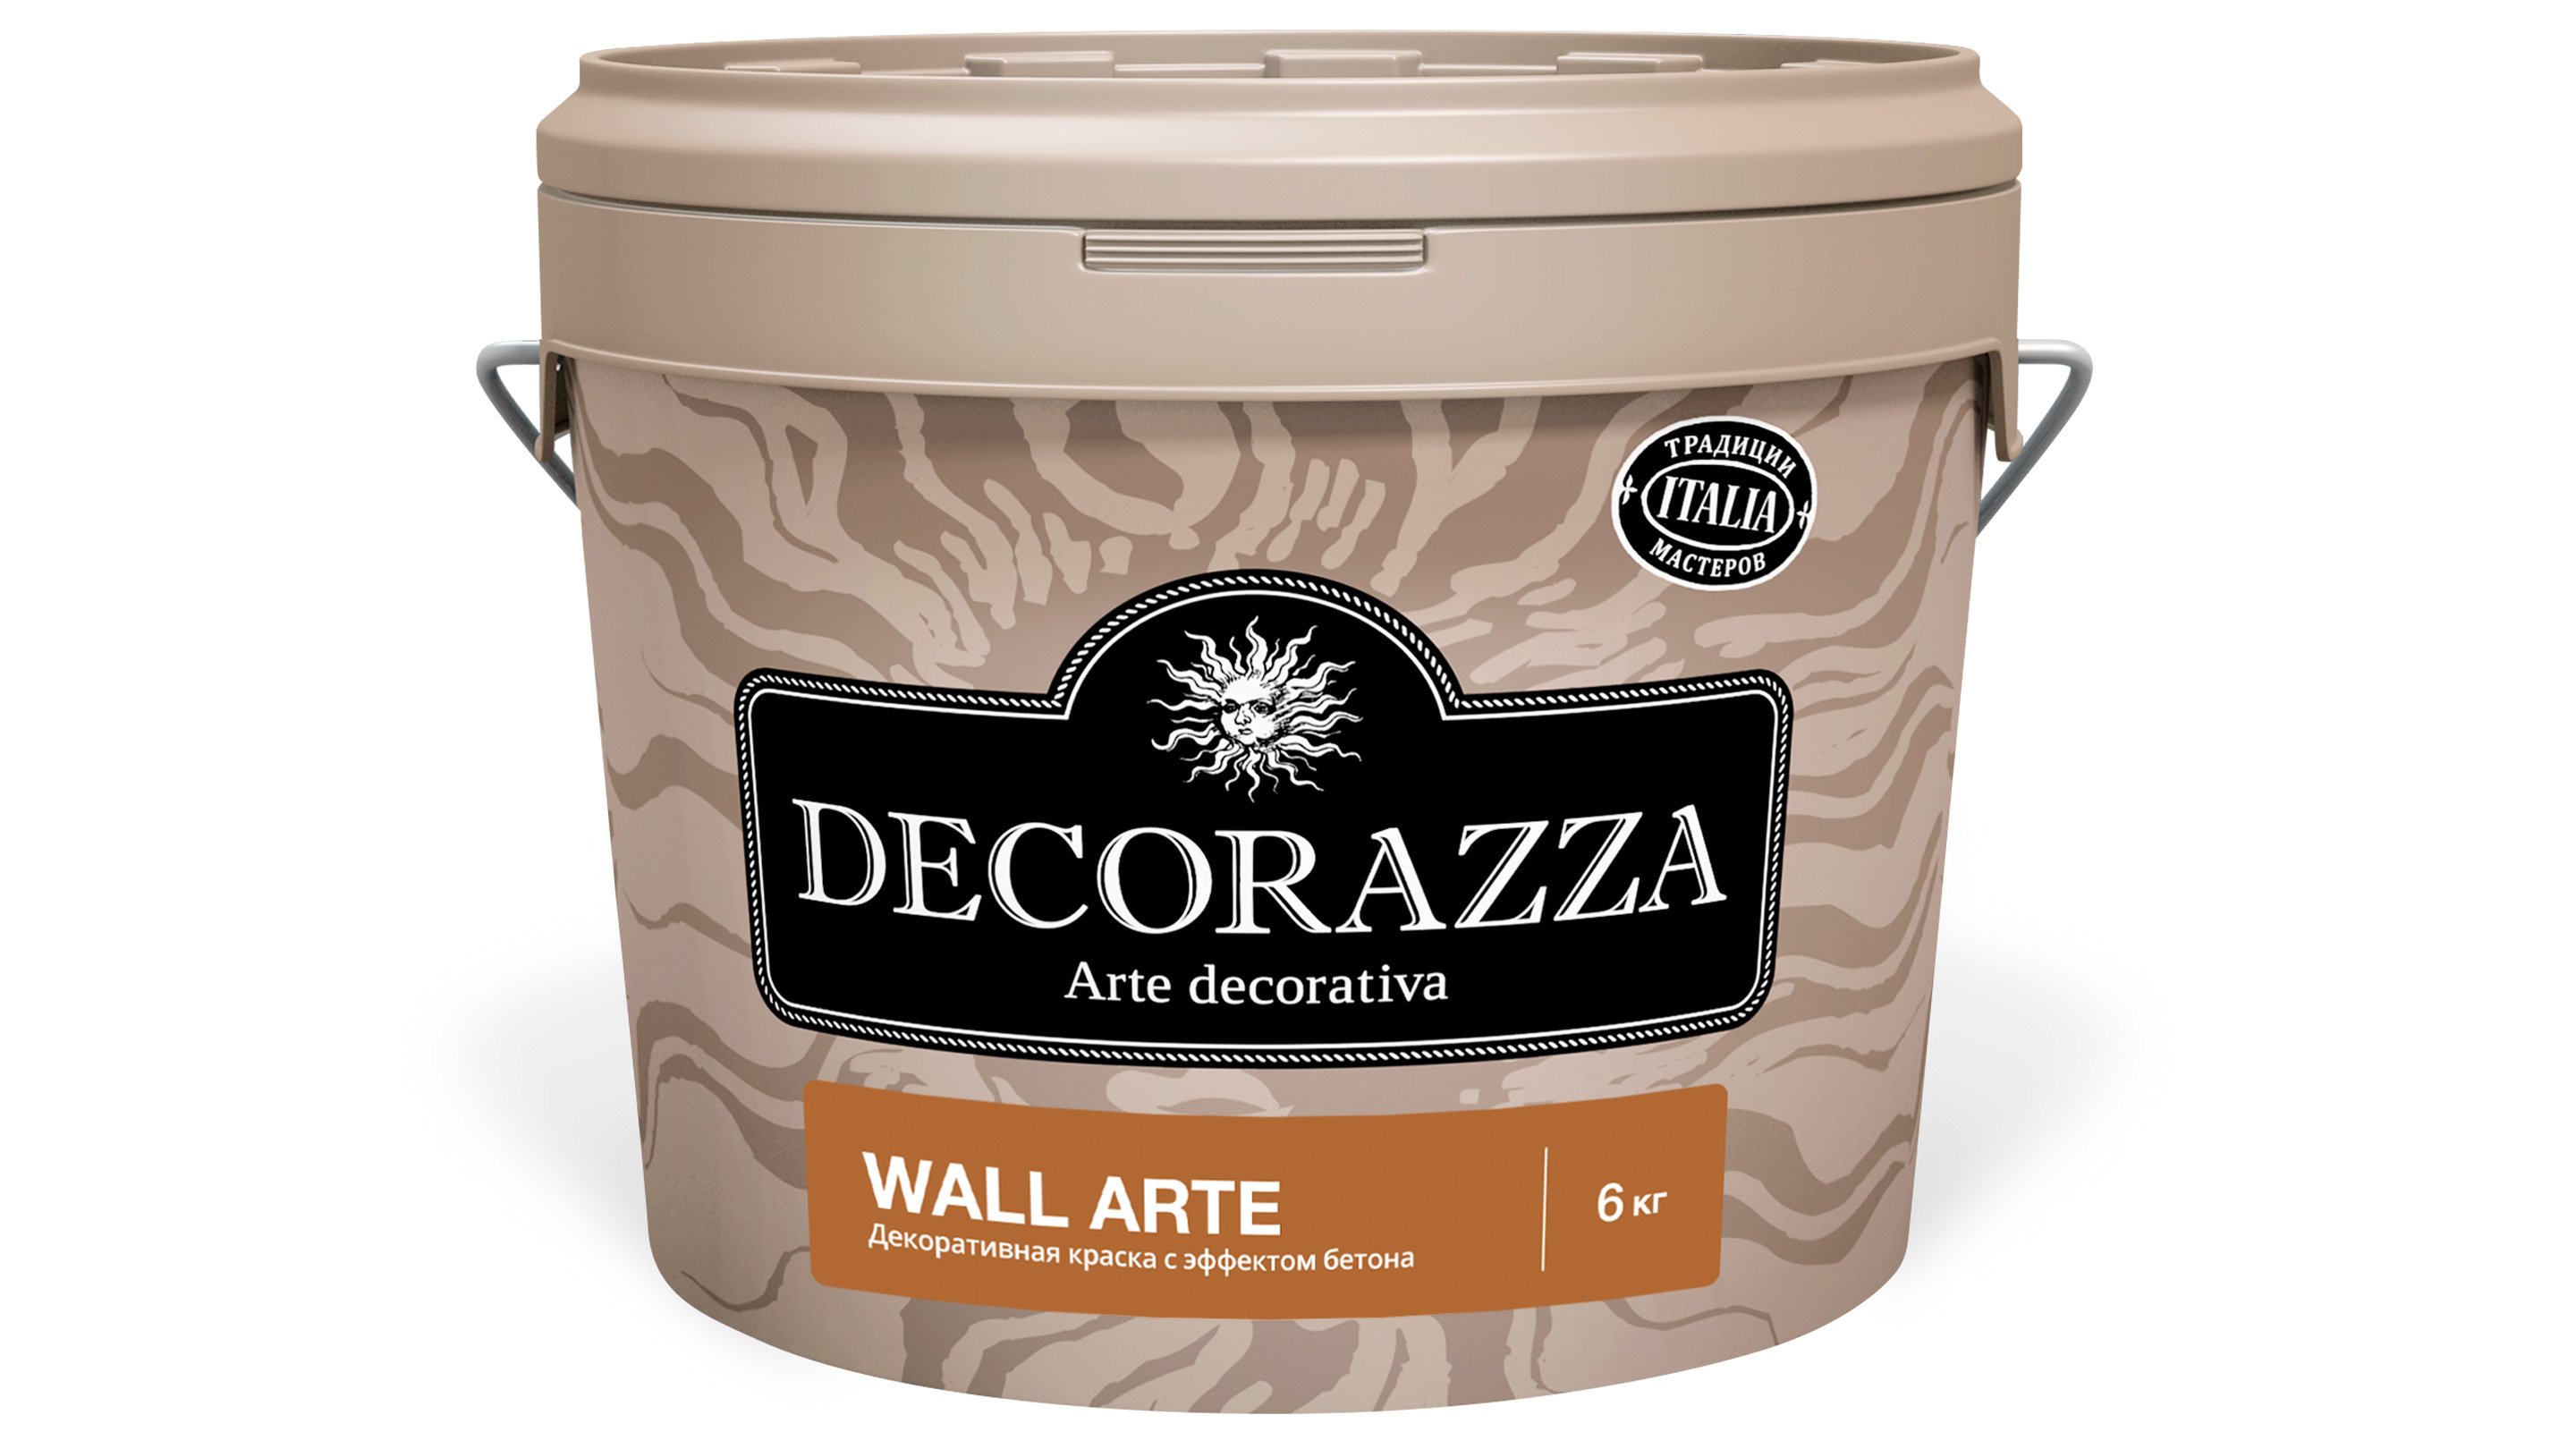 Декоративная штукатурка Decorazza Wall Arte (с эффектом гладкого бетона) 6 кг декоративная штукатурка decorazza seta argento st 001 серебро 5 кг